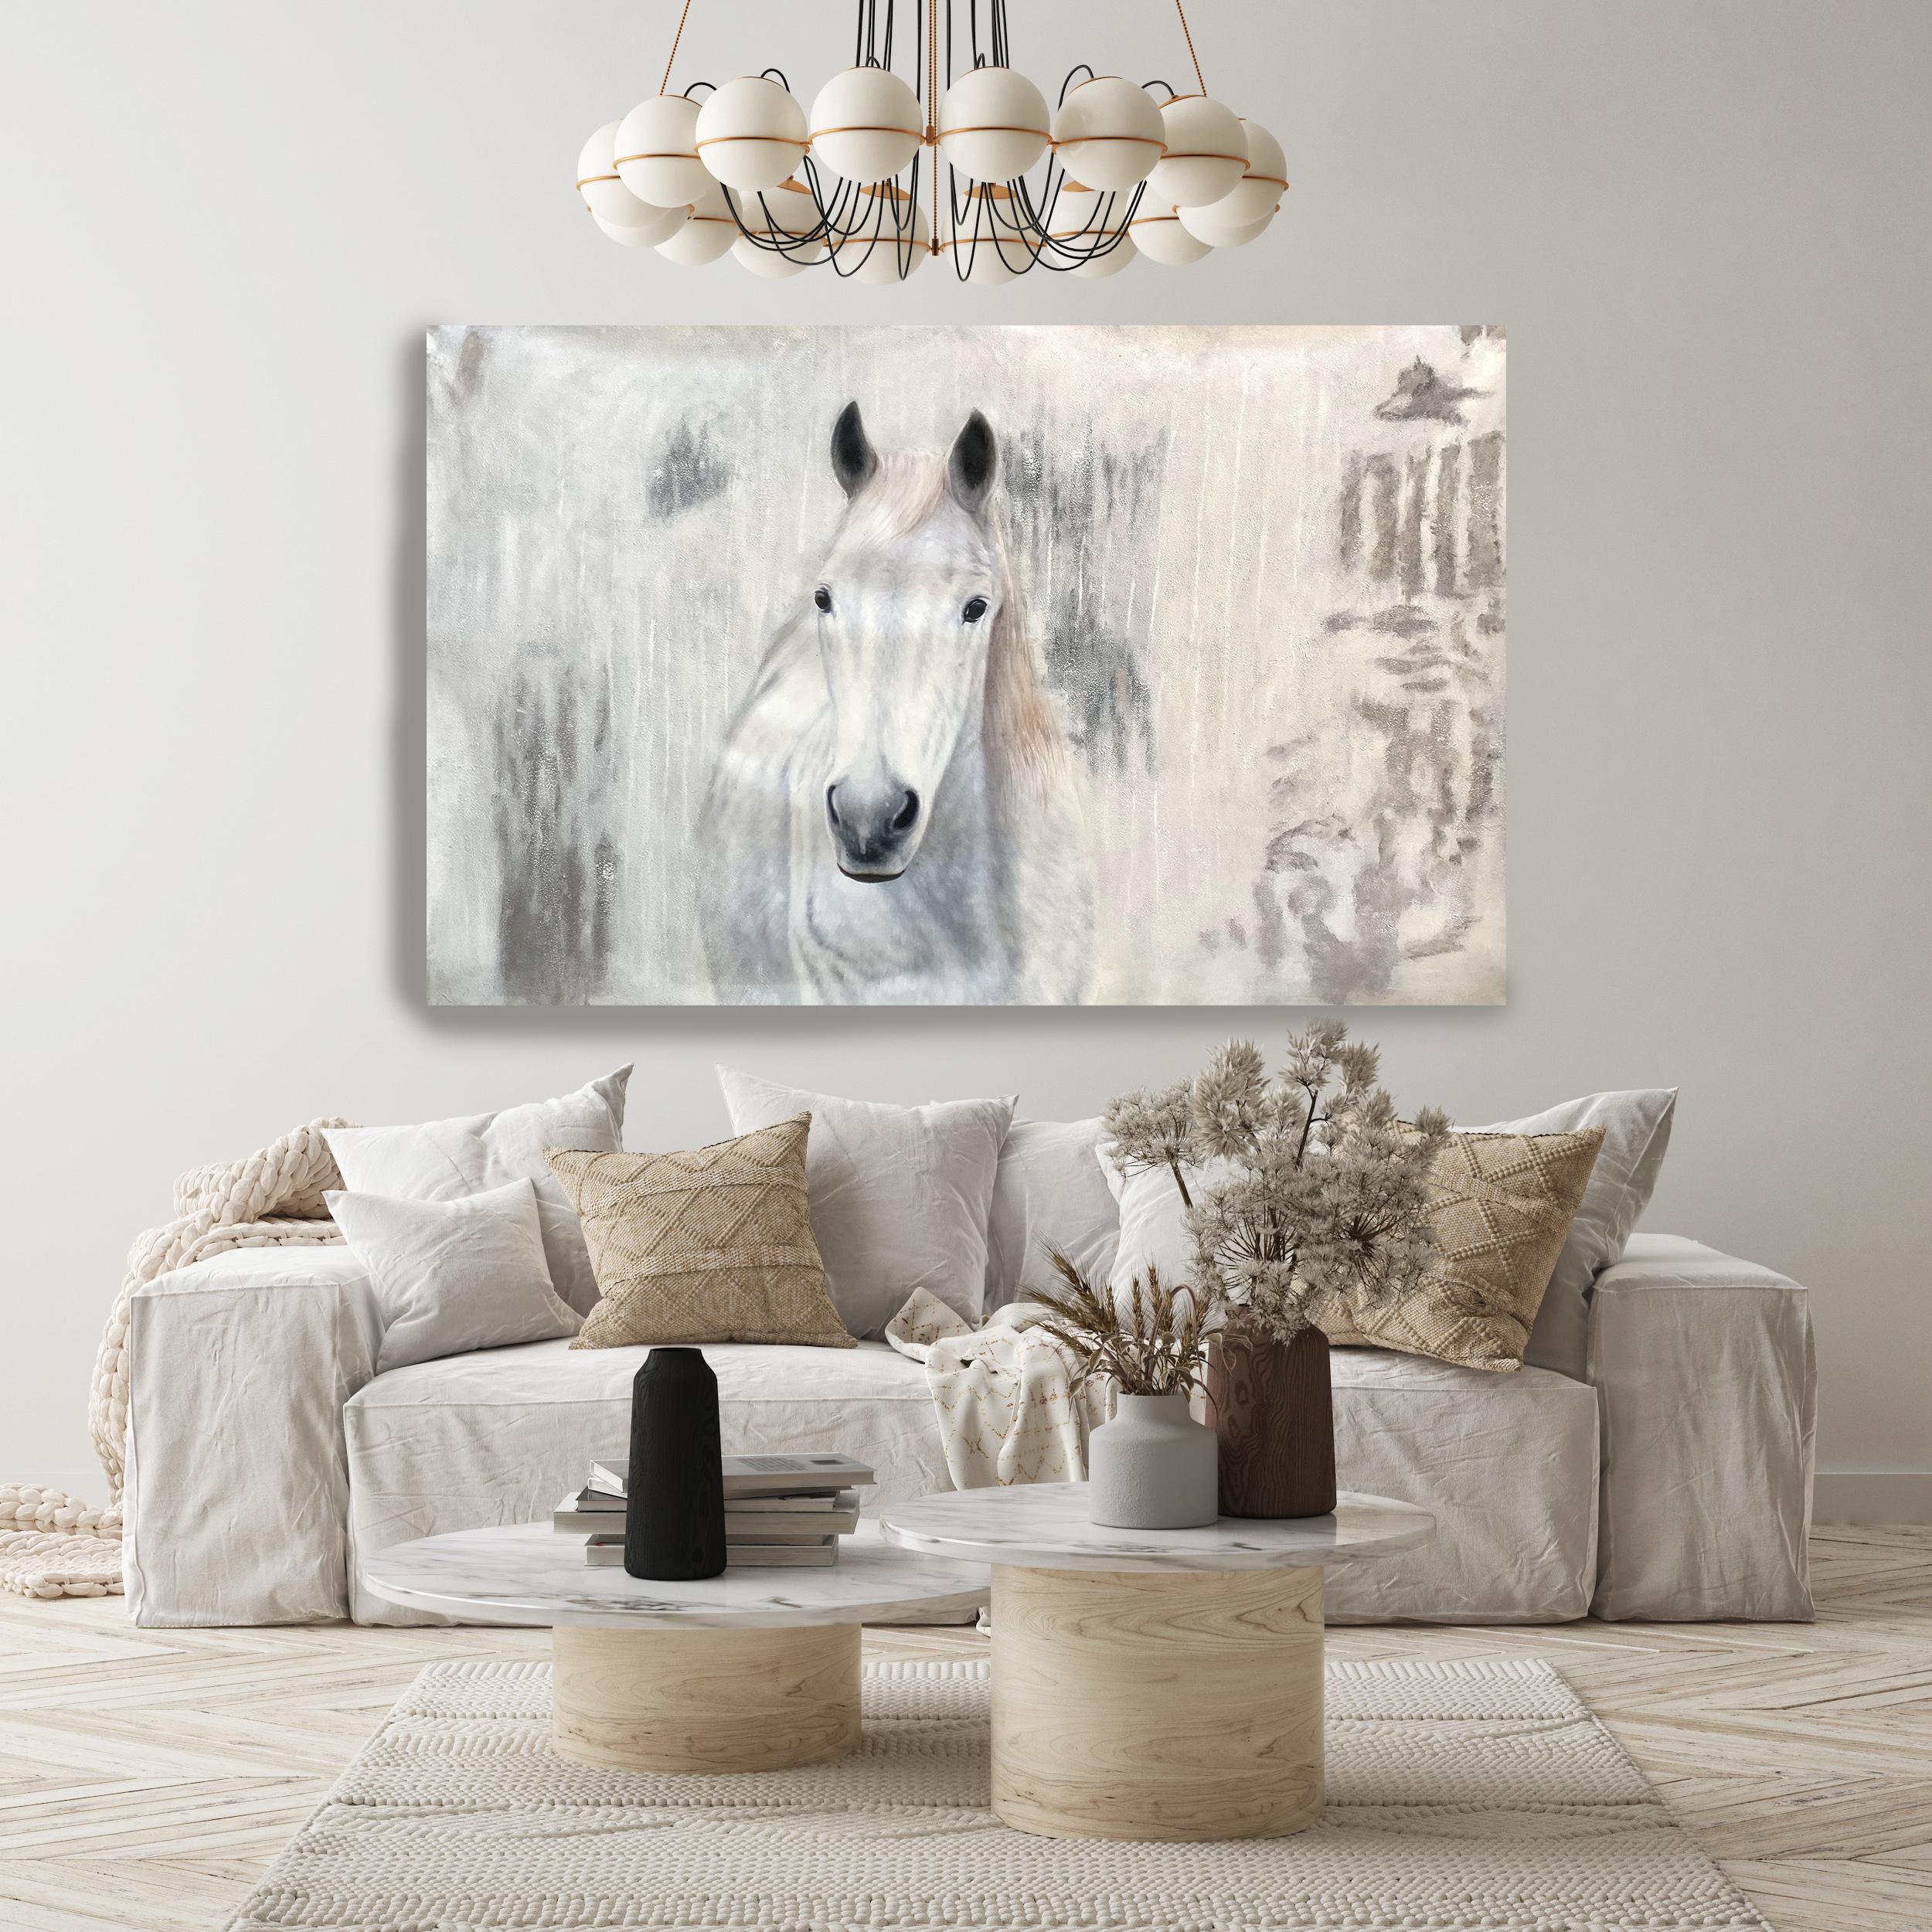 Irena Orlov Animal Painting - White Western Horse Oil Painting on Canvas 50Hx72W Horse Portrait Art